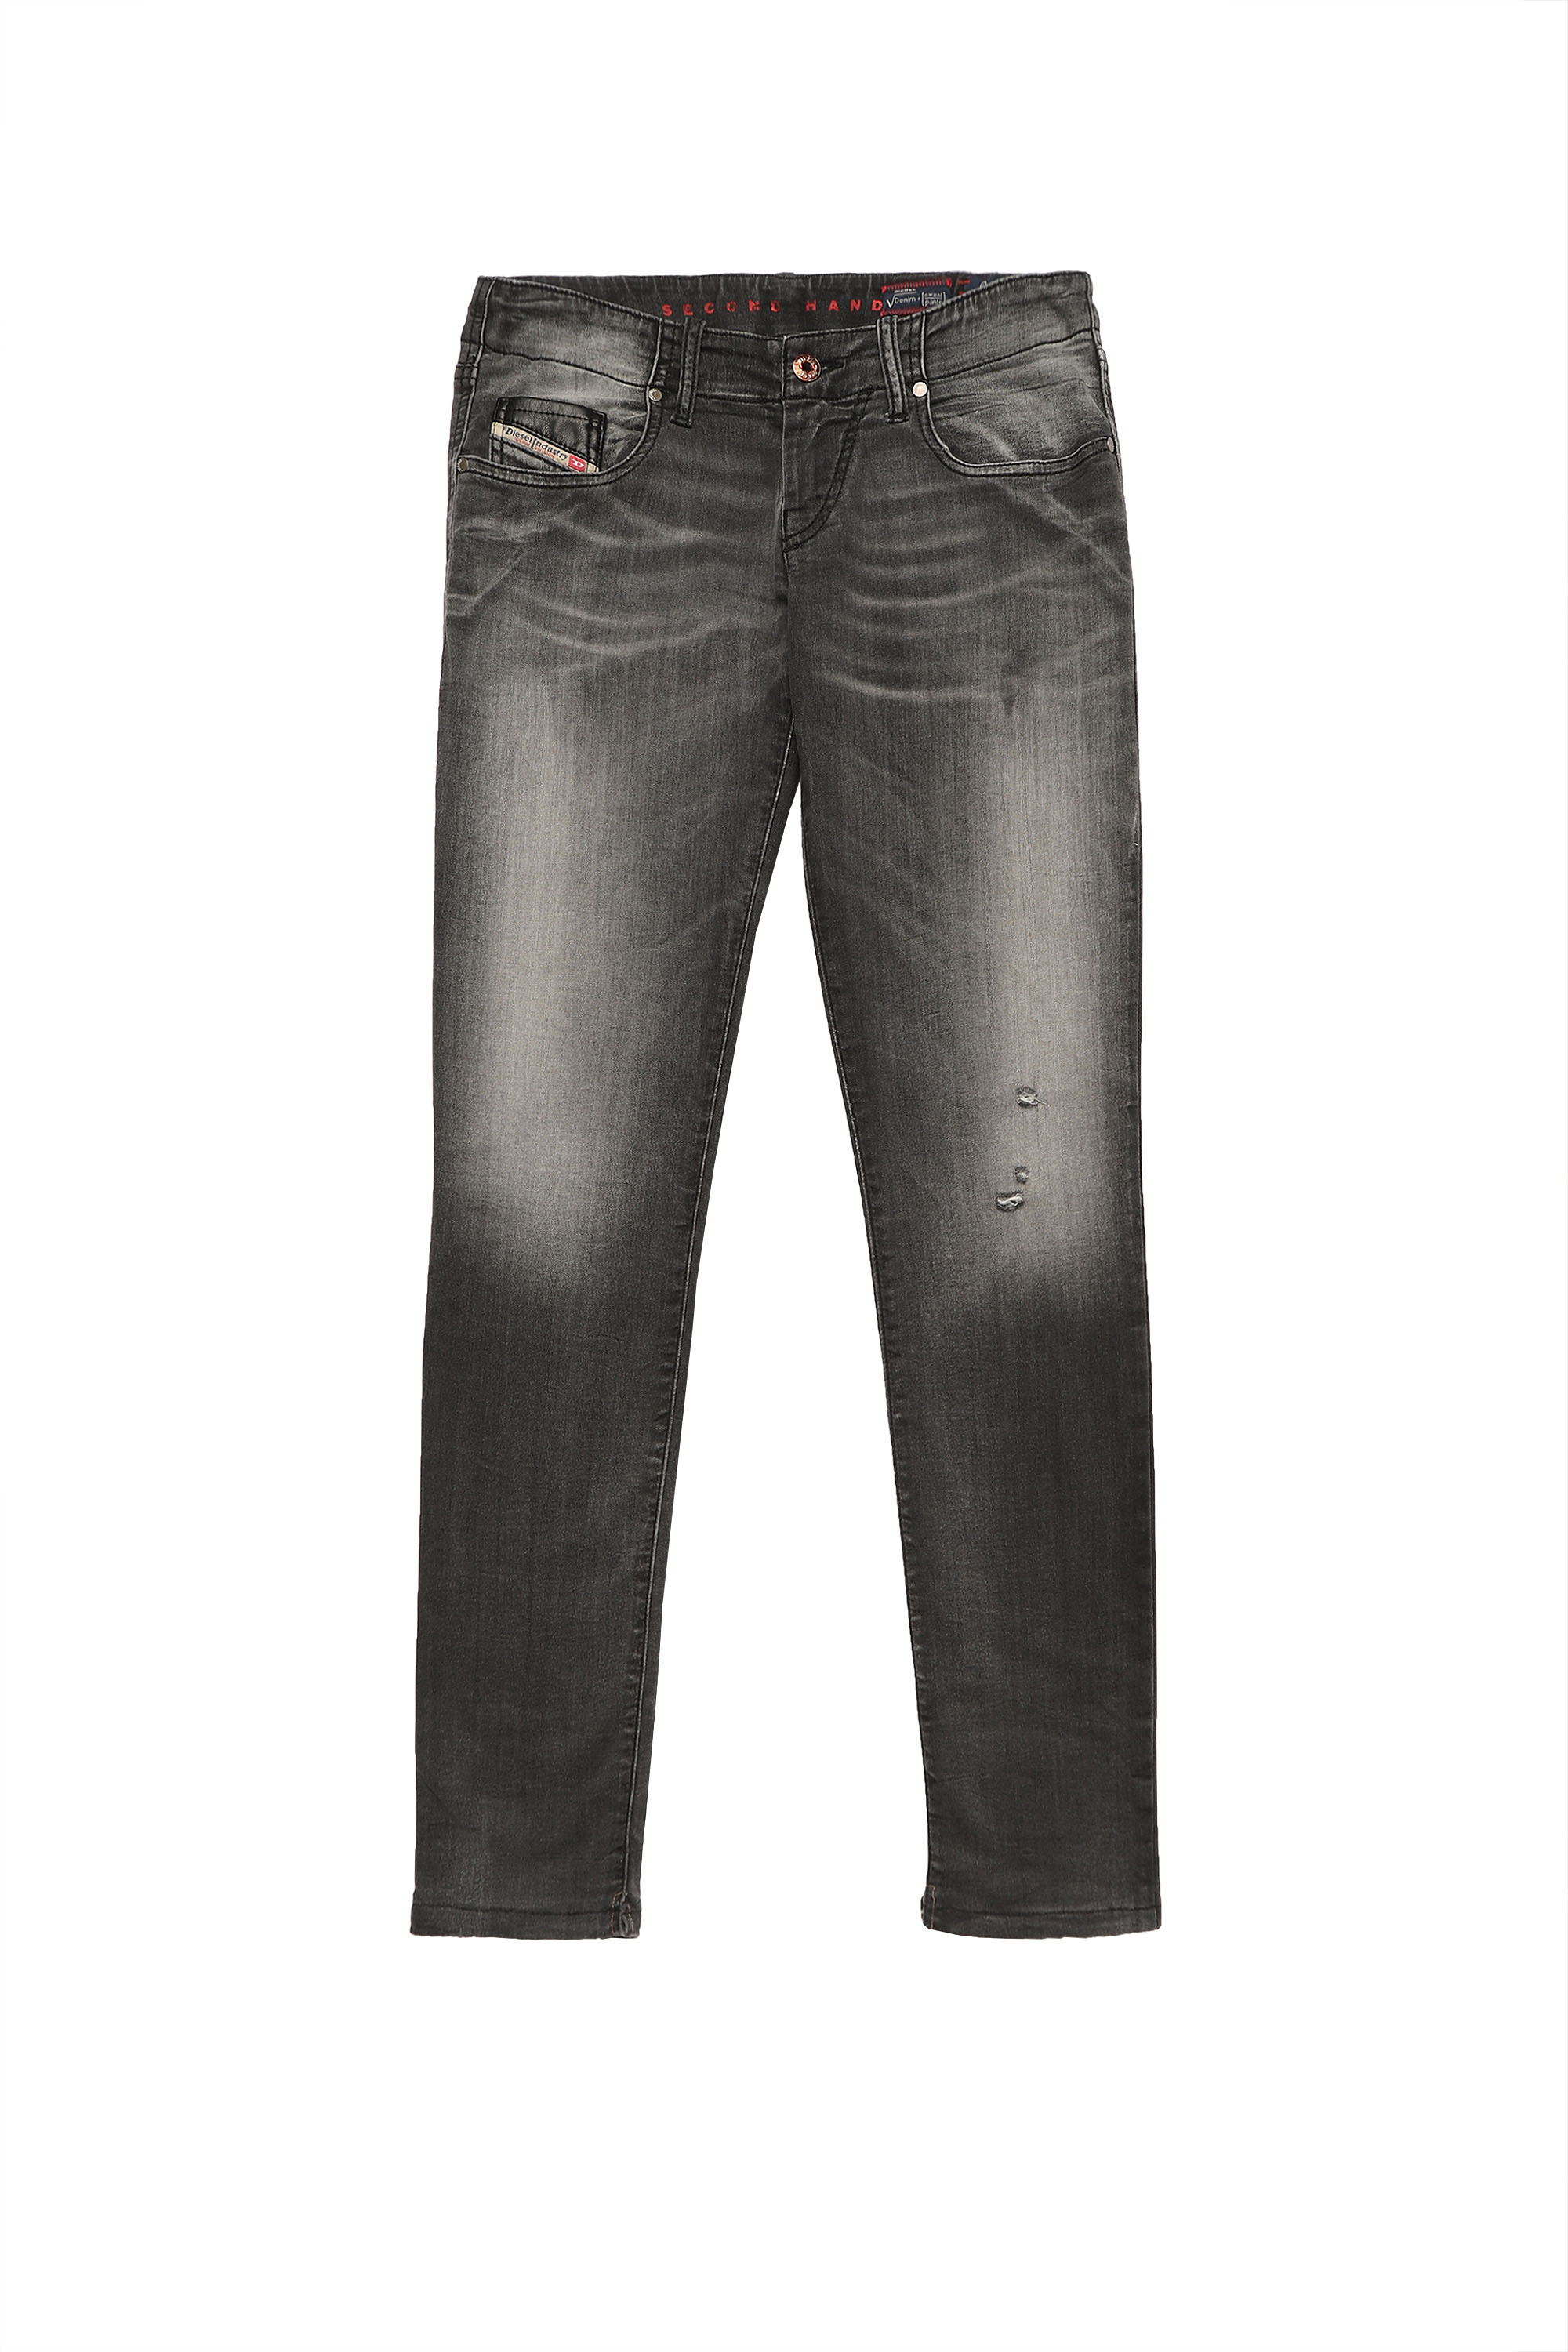 GRUPEE JoggJeans®, Schwarz/Dunkelgrau - Jeans